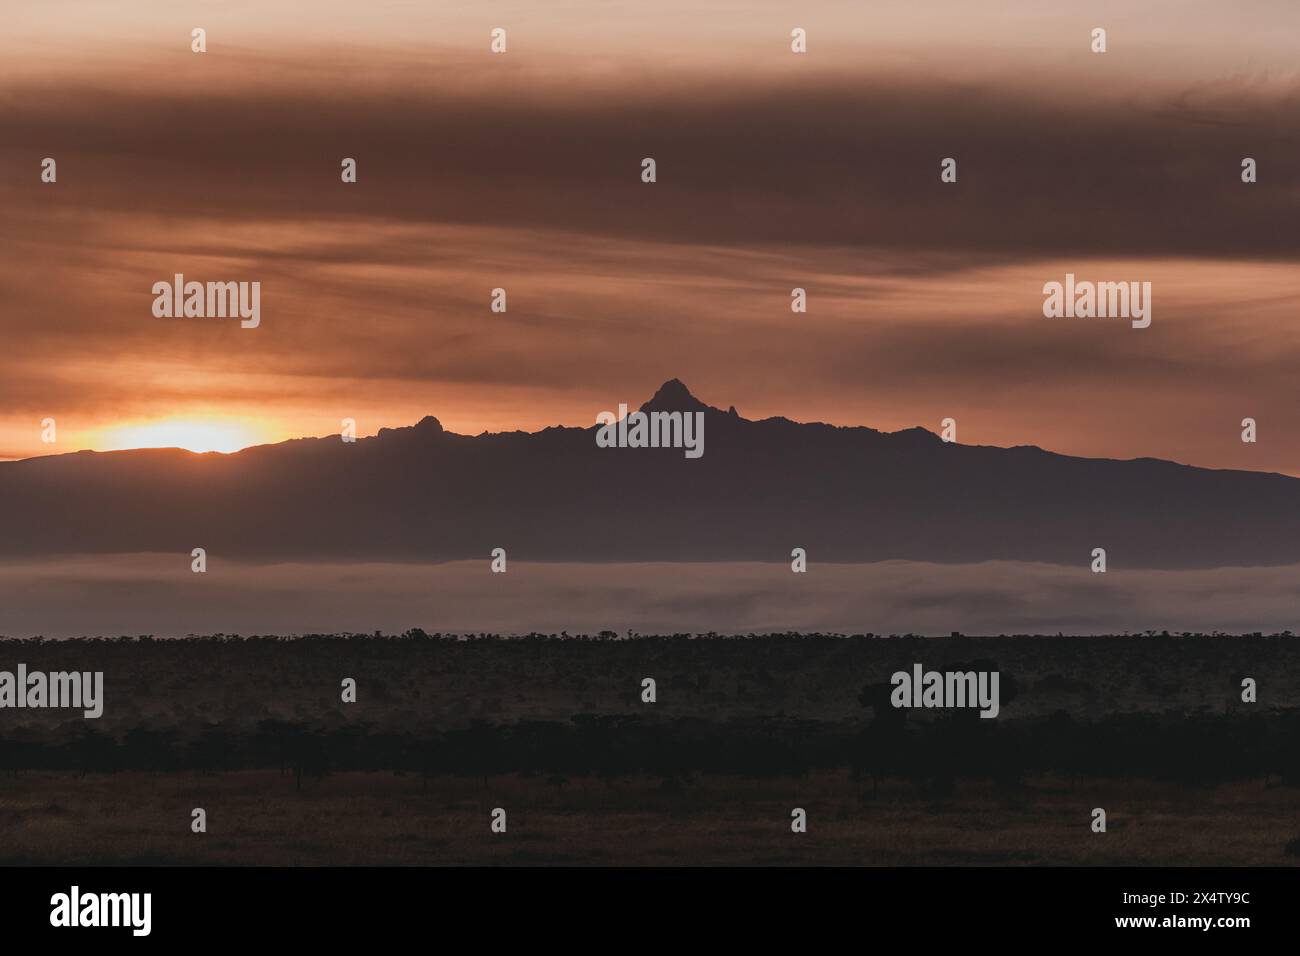 Fiery sunset silhouettes Mount Kenya over misty landscape Stock Photo